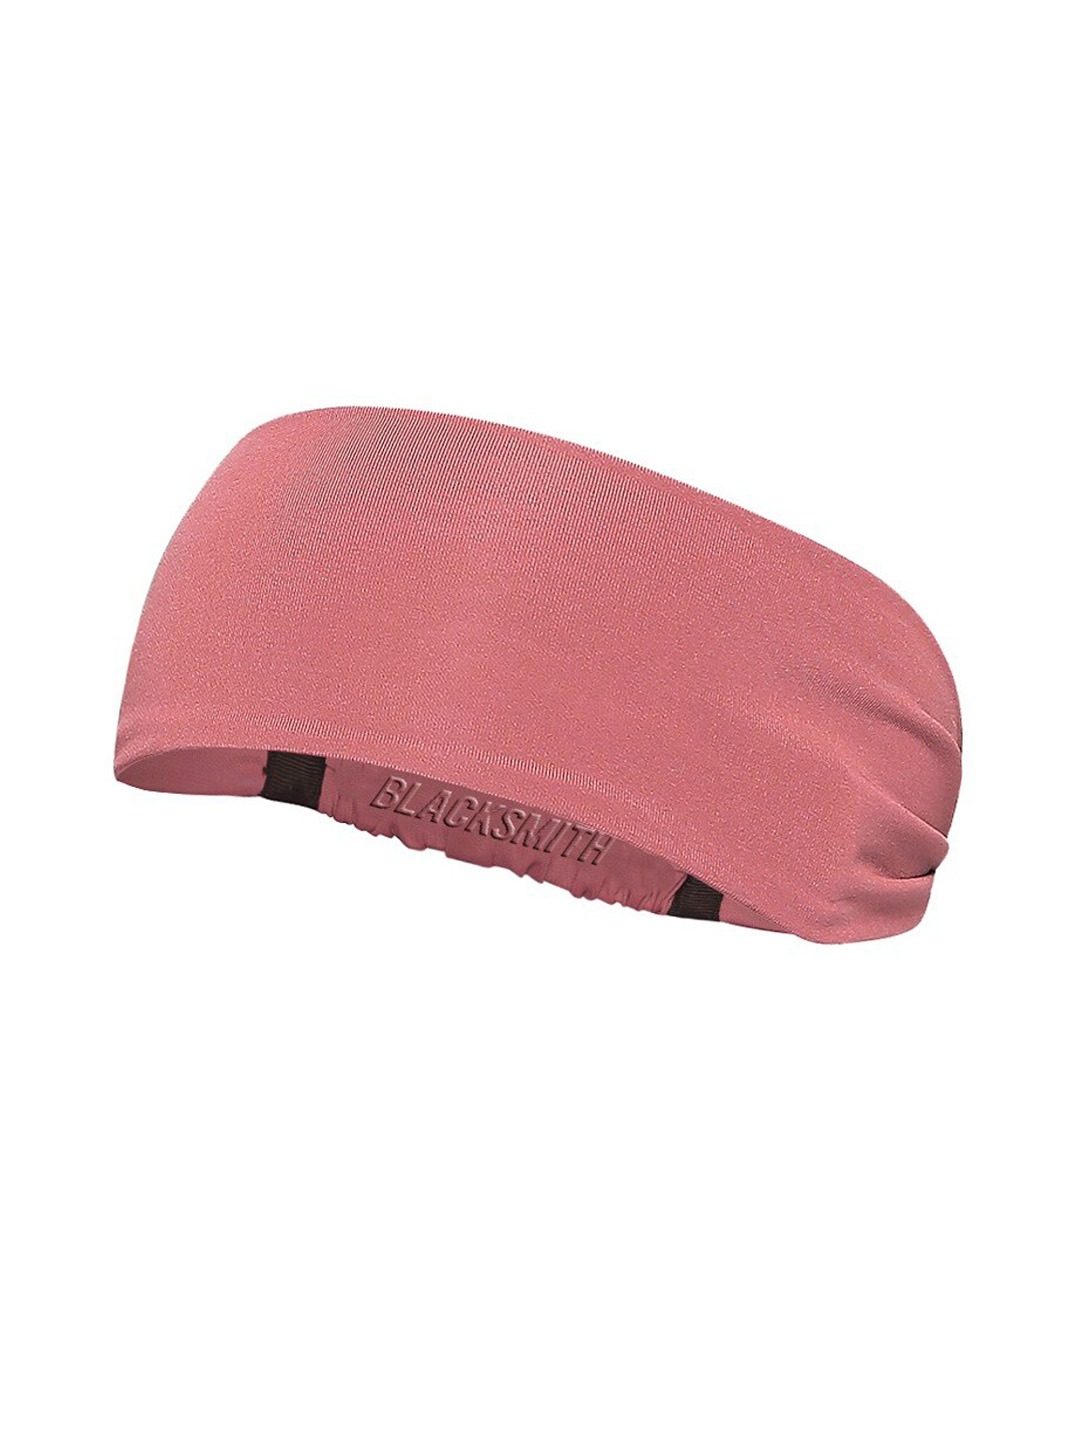 Accessories Headband | Blacksmith Unisex Pink & Black BLSM Sports Headband - CU44829